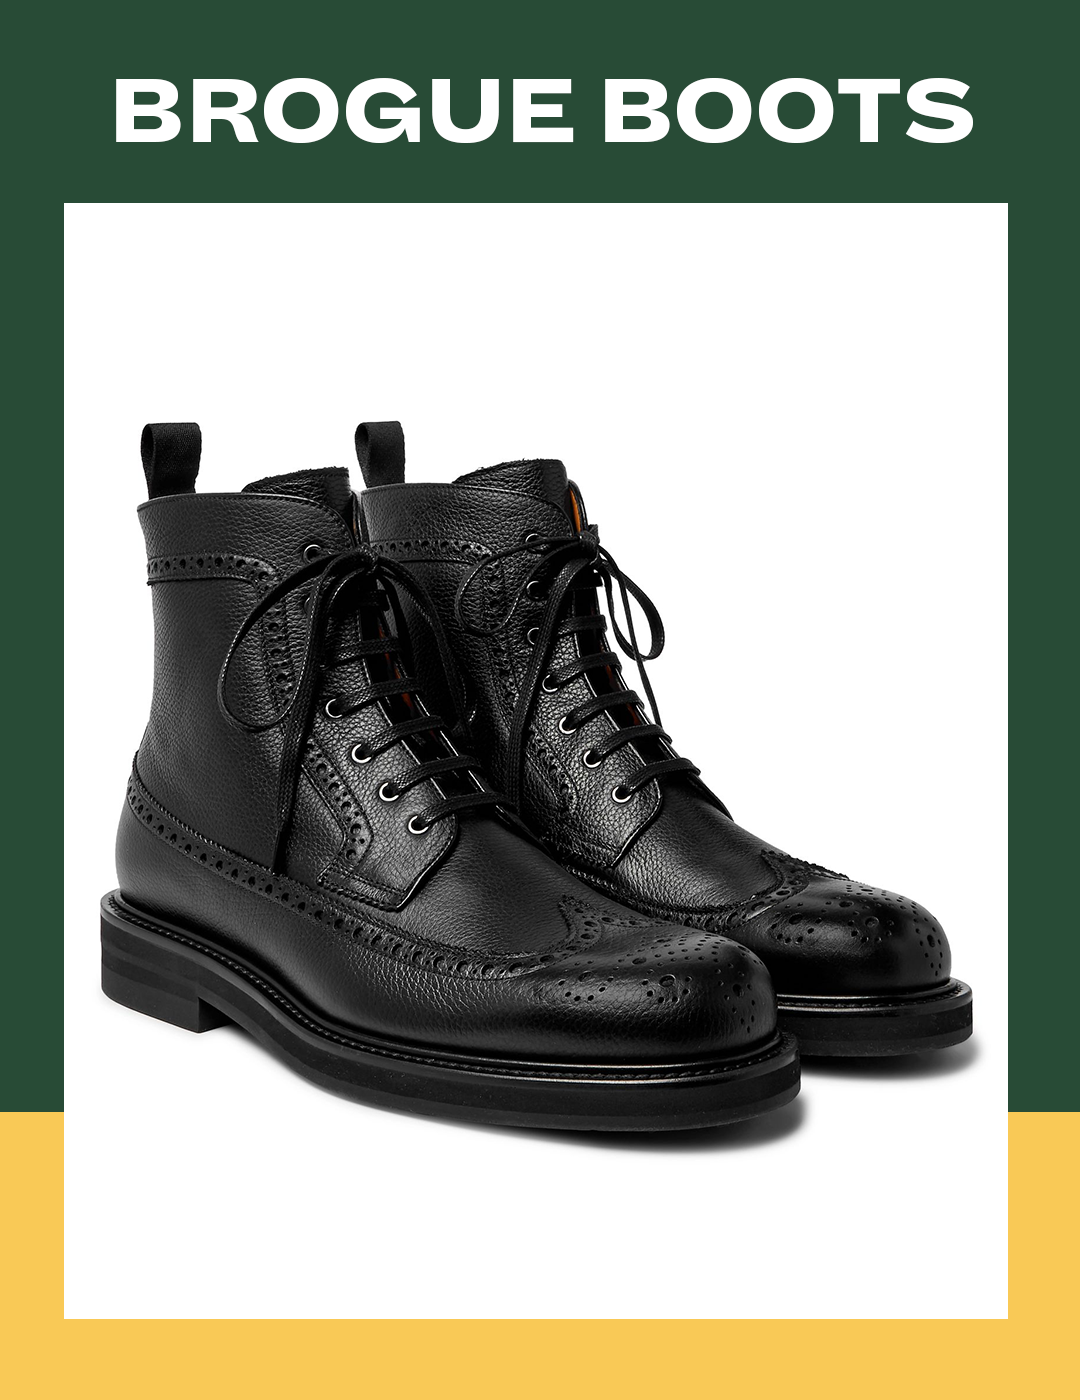 classic boot brands